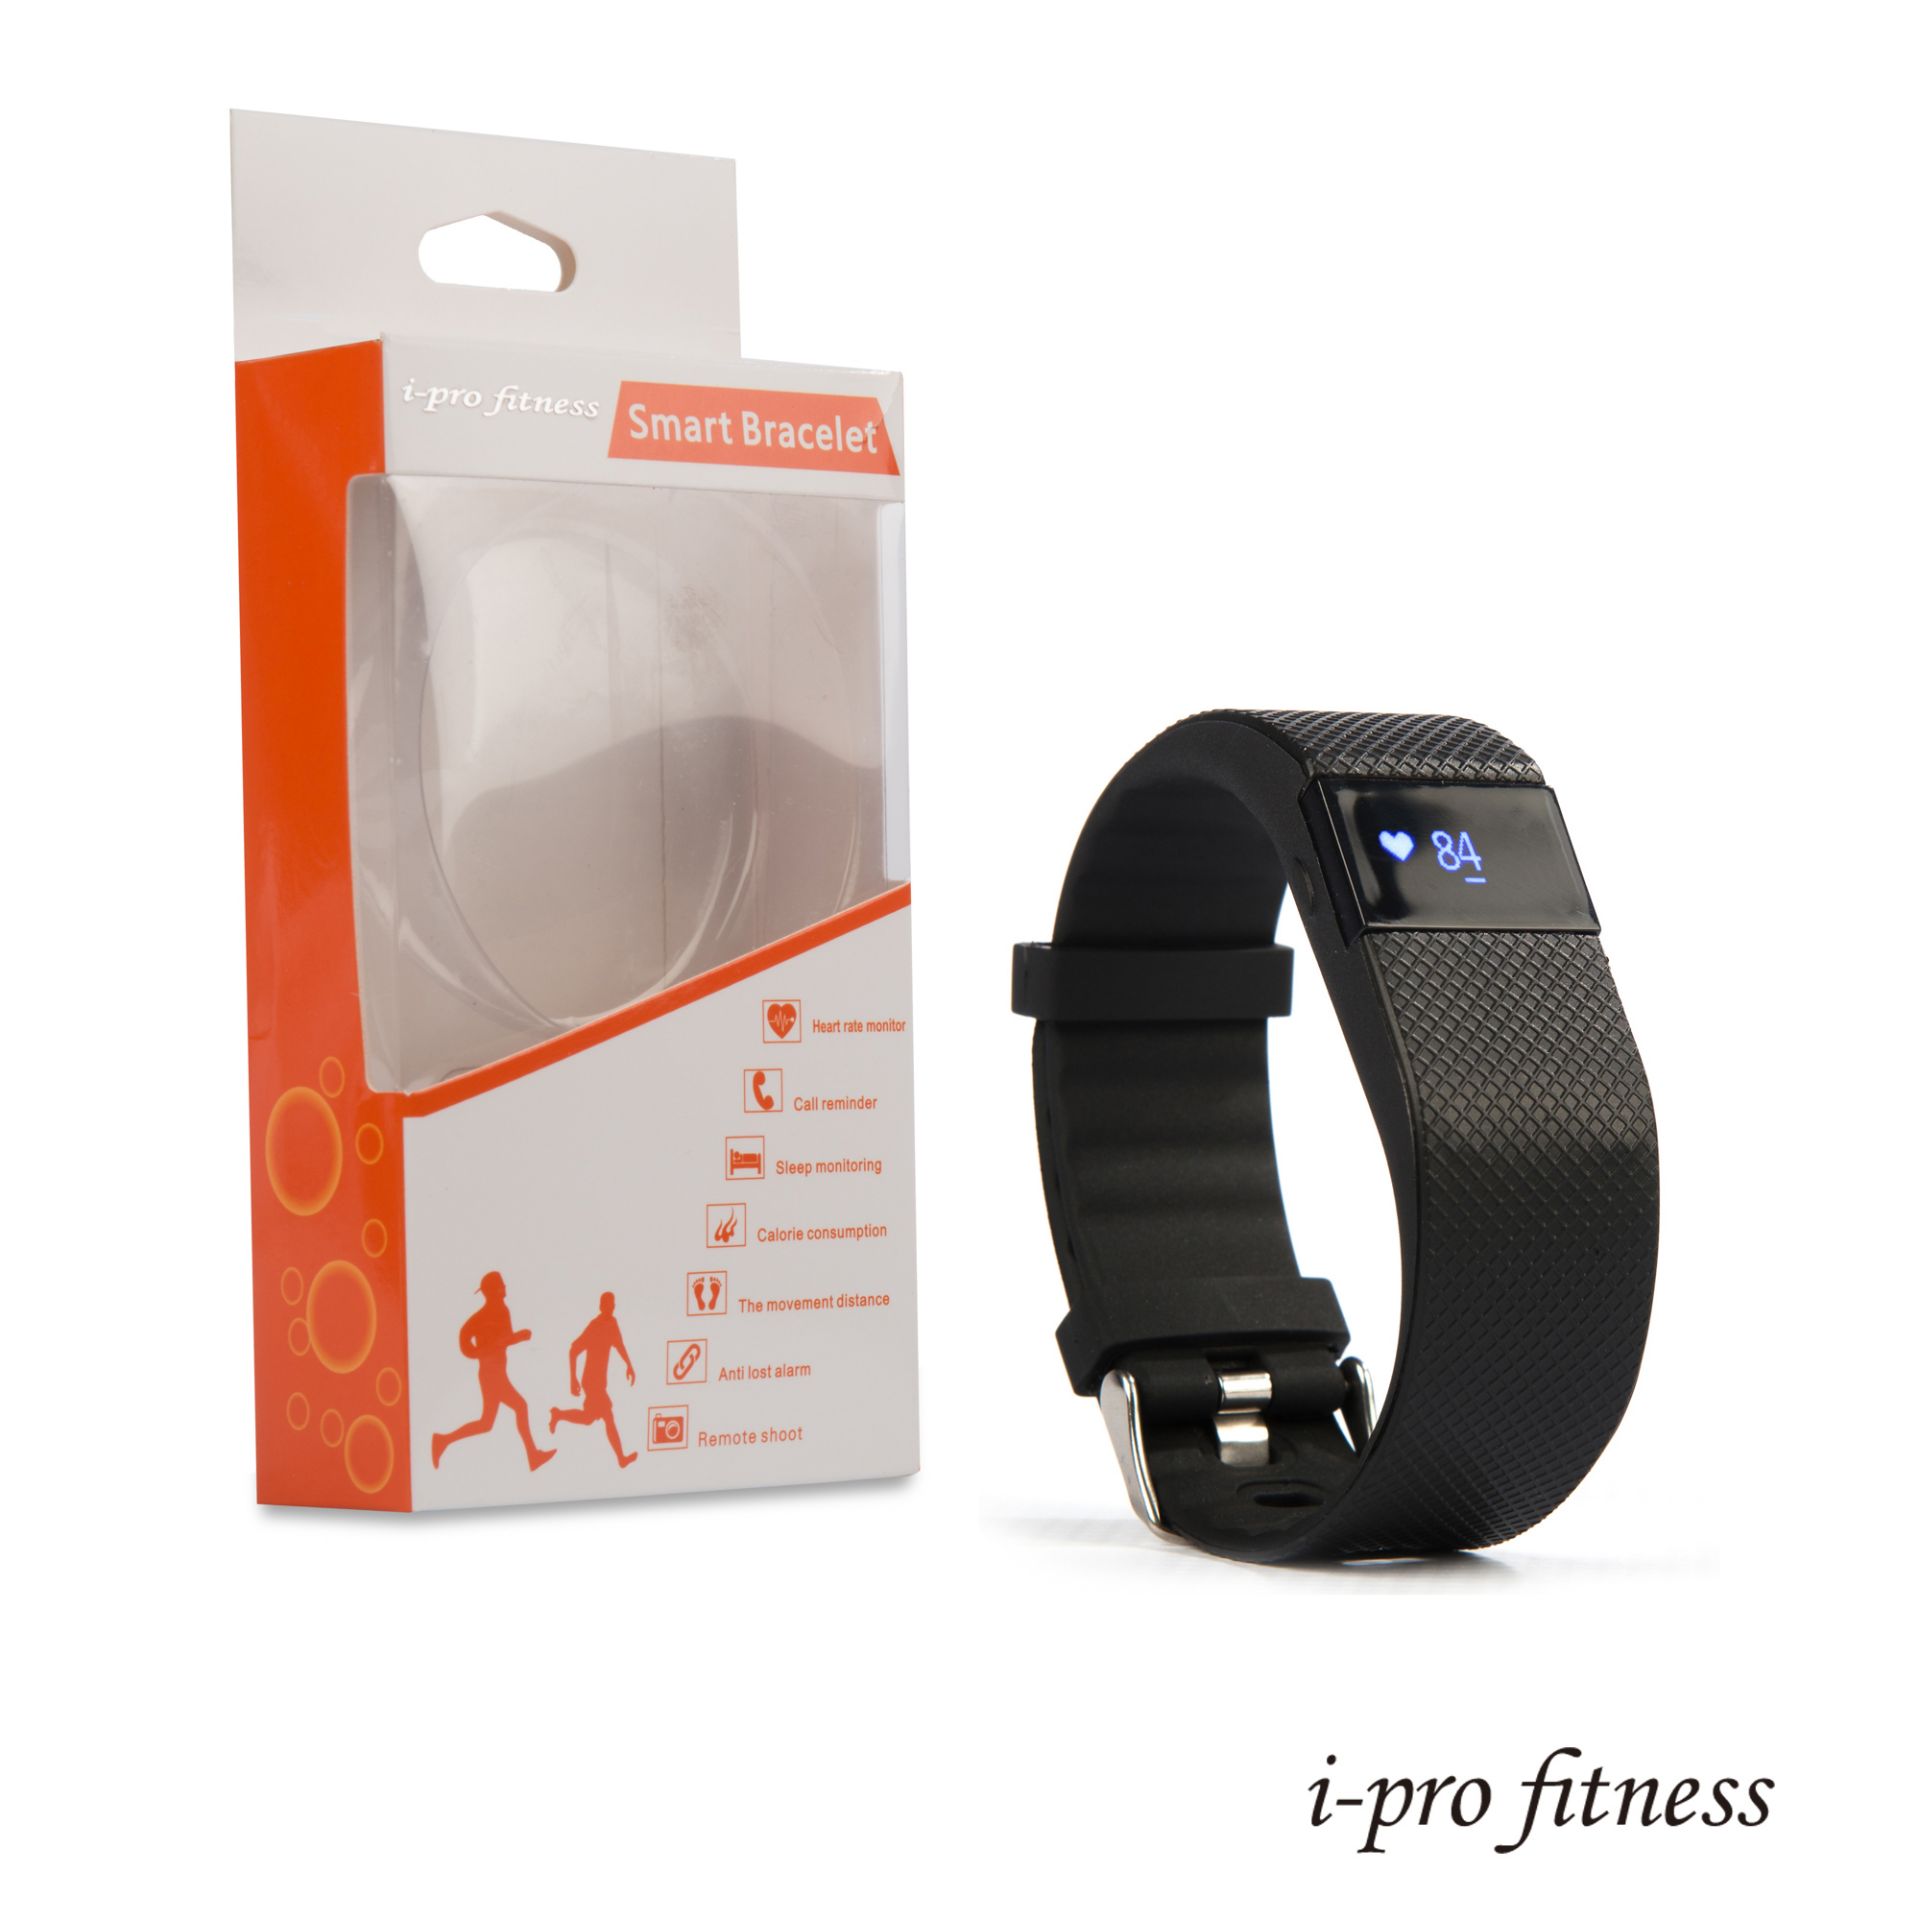 10x Fitness Tracker i-pro fitness, Bluetooth 4.0 Sports Smart Bracelet, Heart Rate Monitor, - Image 3 of 8